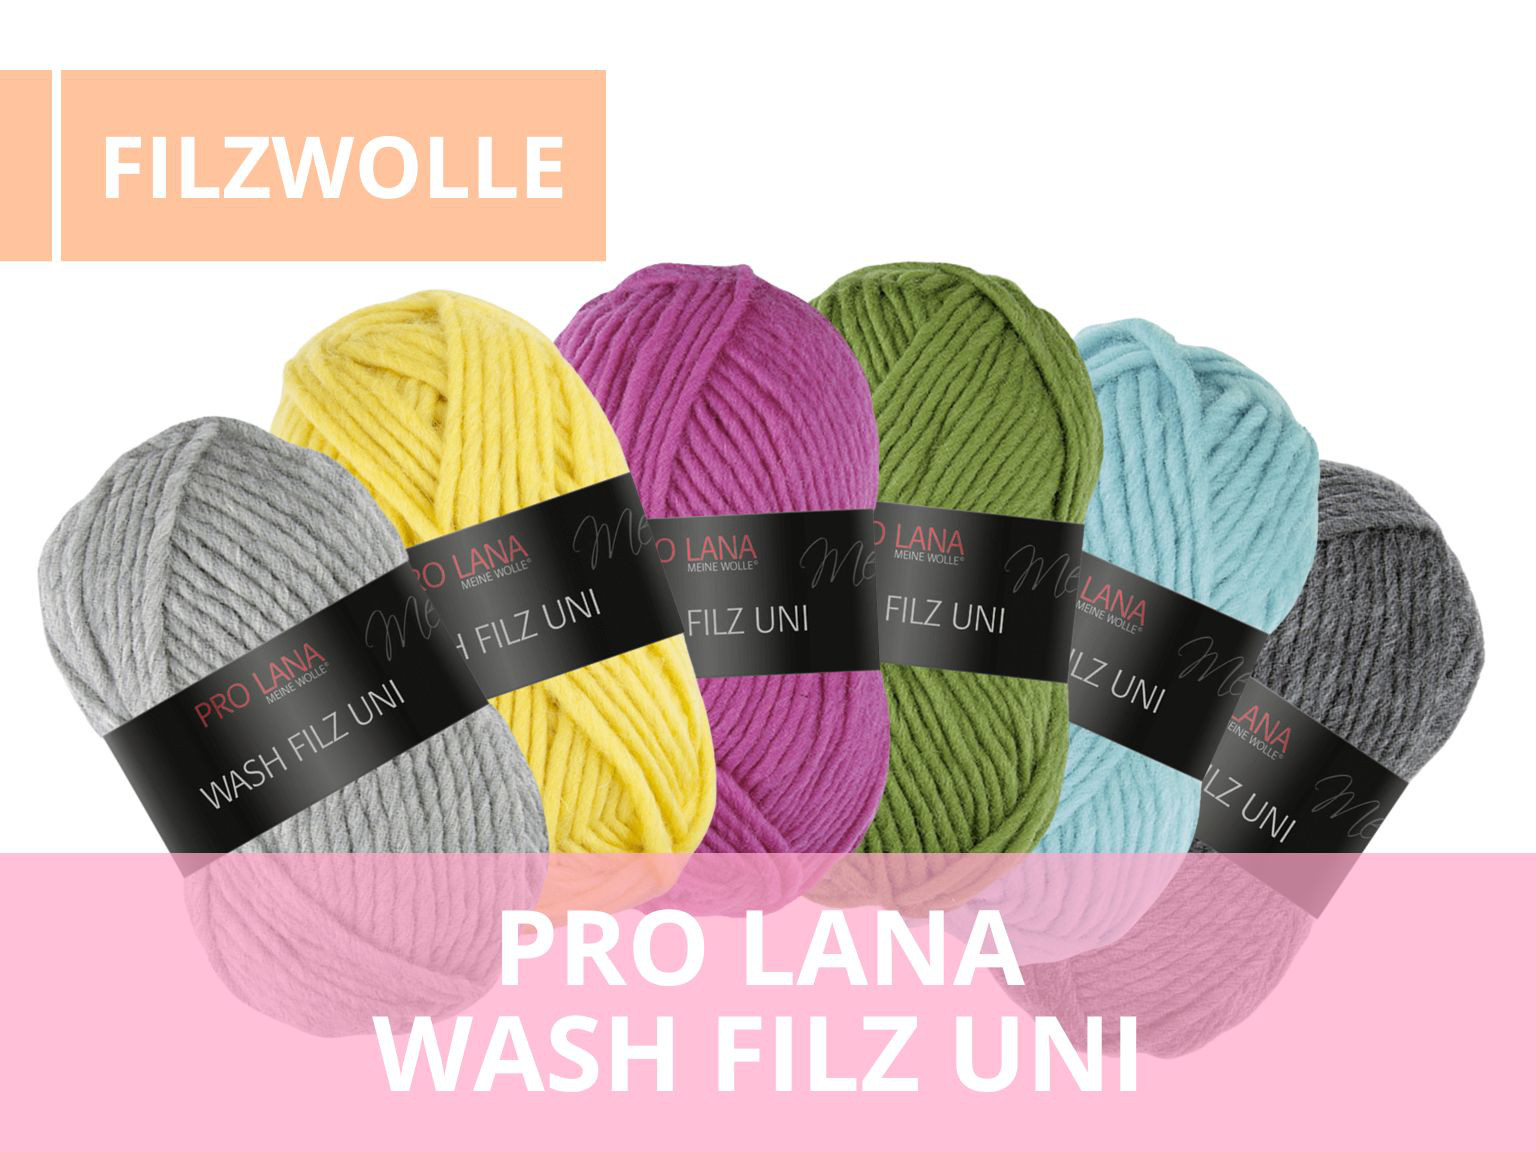 Pro Lana Wash Filz uni Wolle